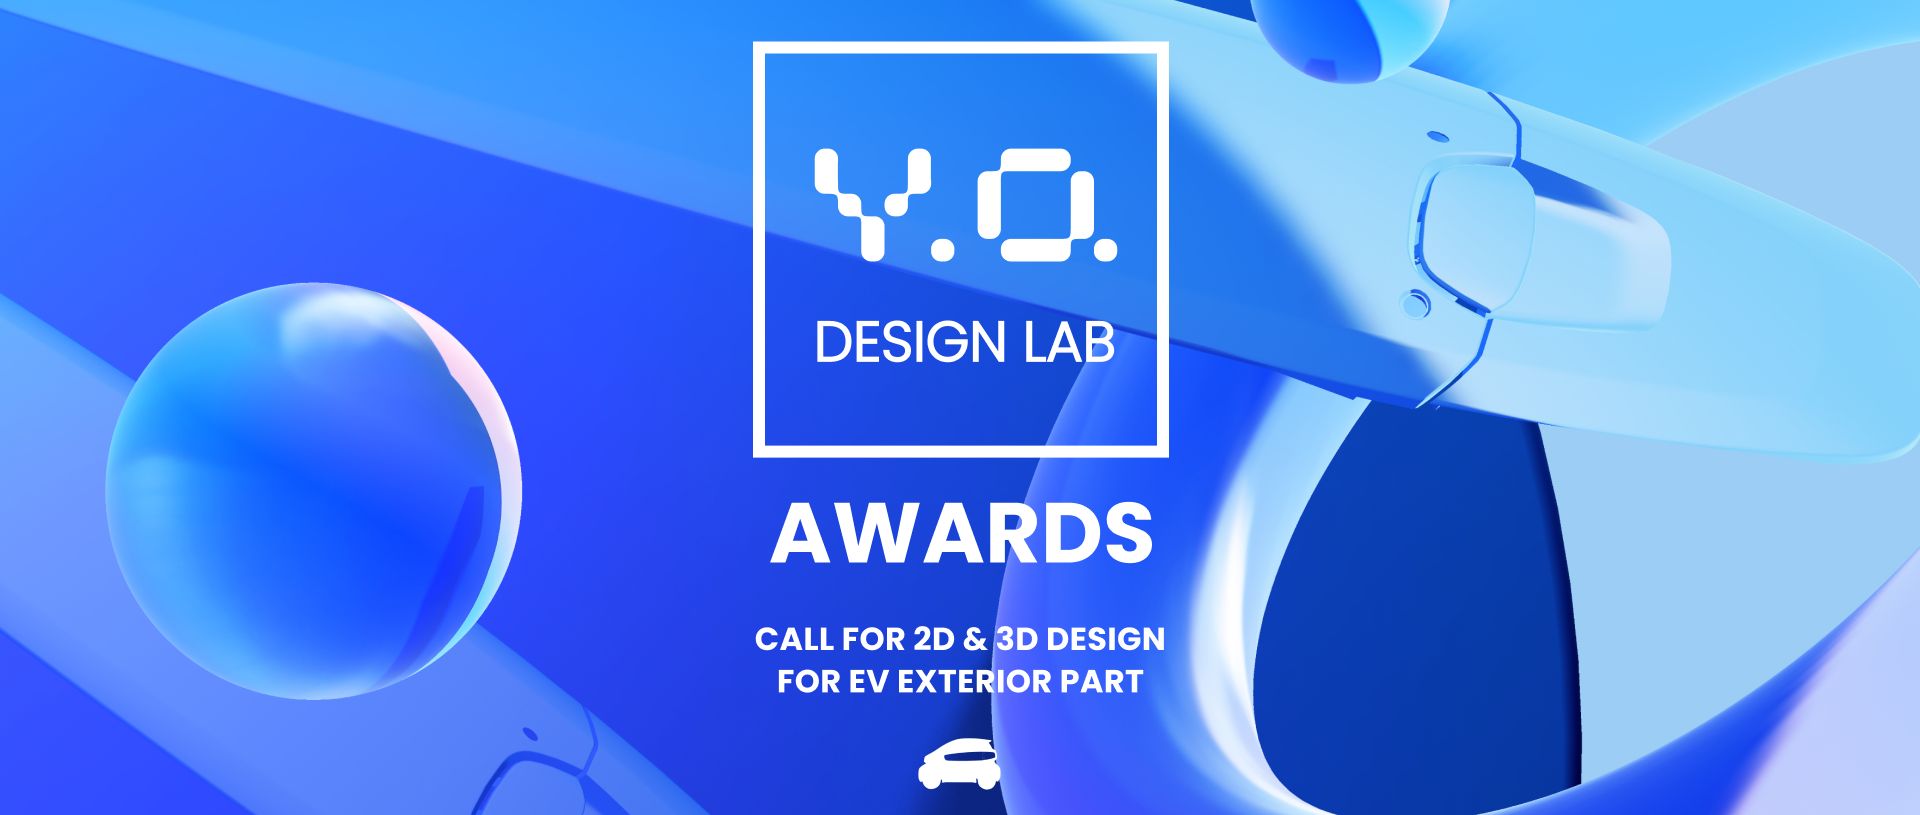 Y.O. Design Lab Awards 新能源车外饰板设计大赛 3D&2D设计招募开启